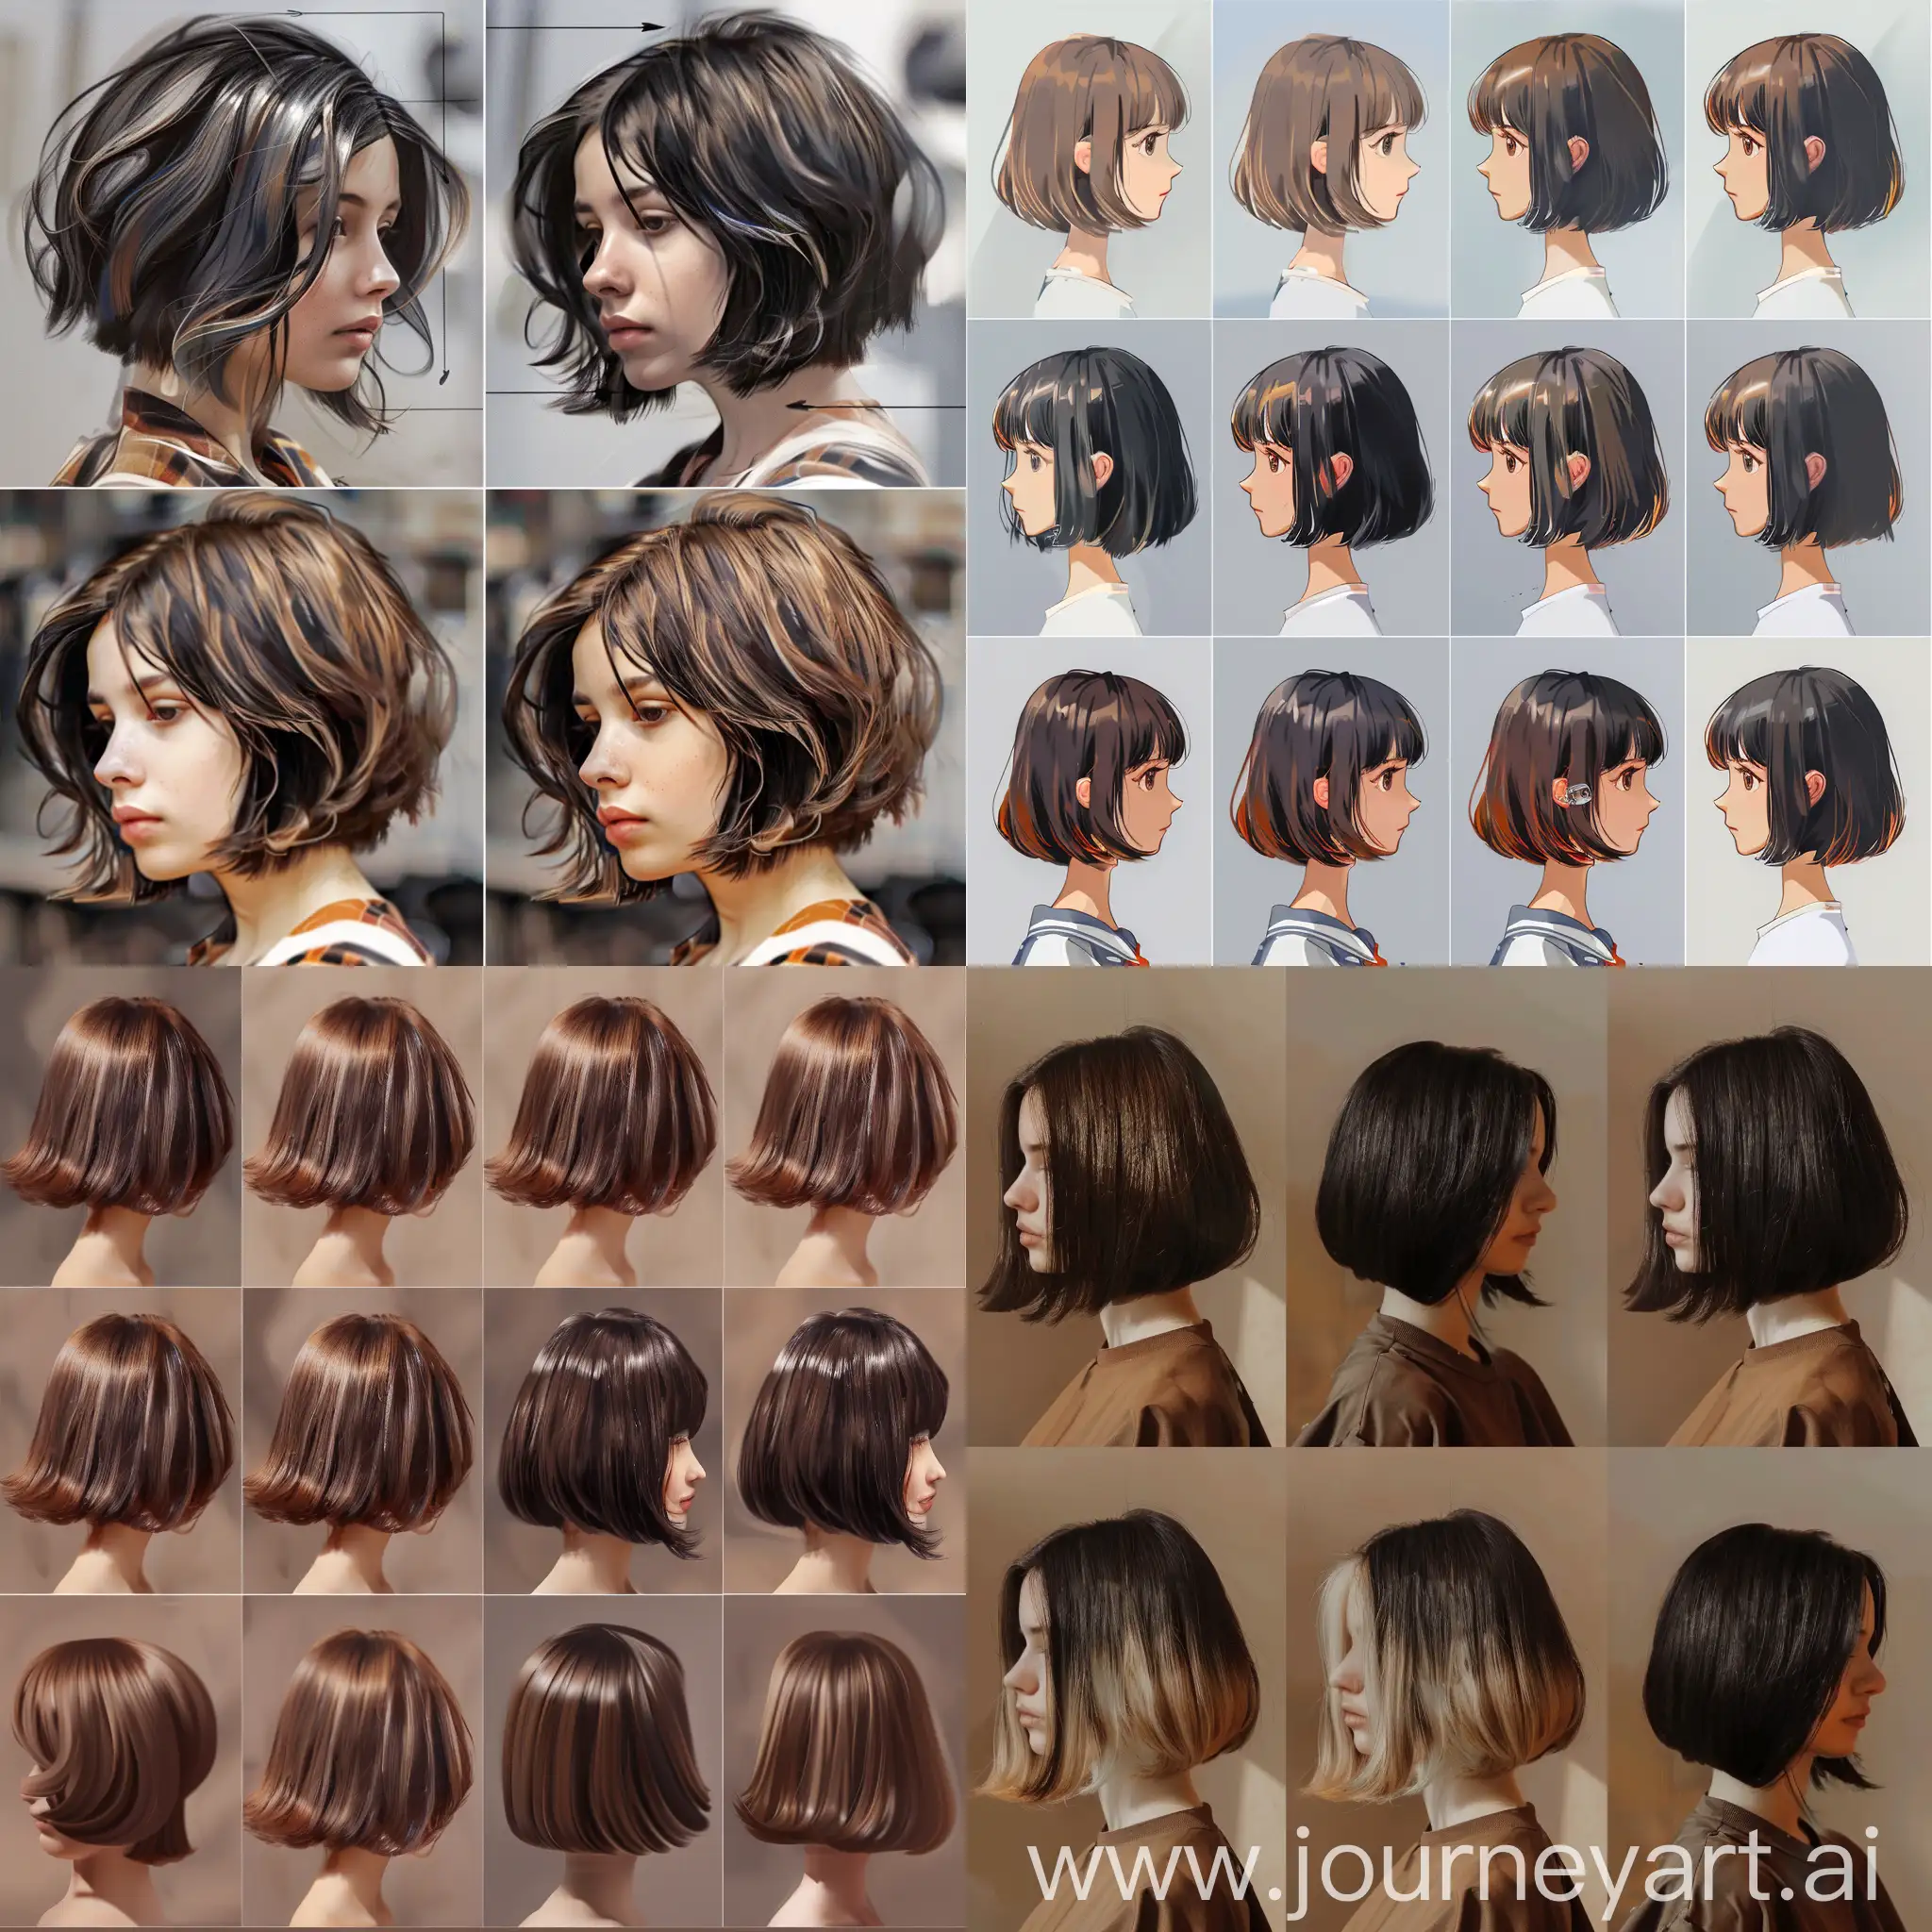 StepbyStep-Hair-Transformation-From-MediumLength-to-Bob-Cut